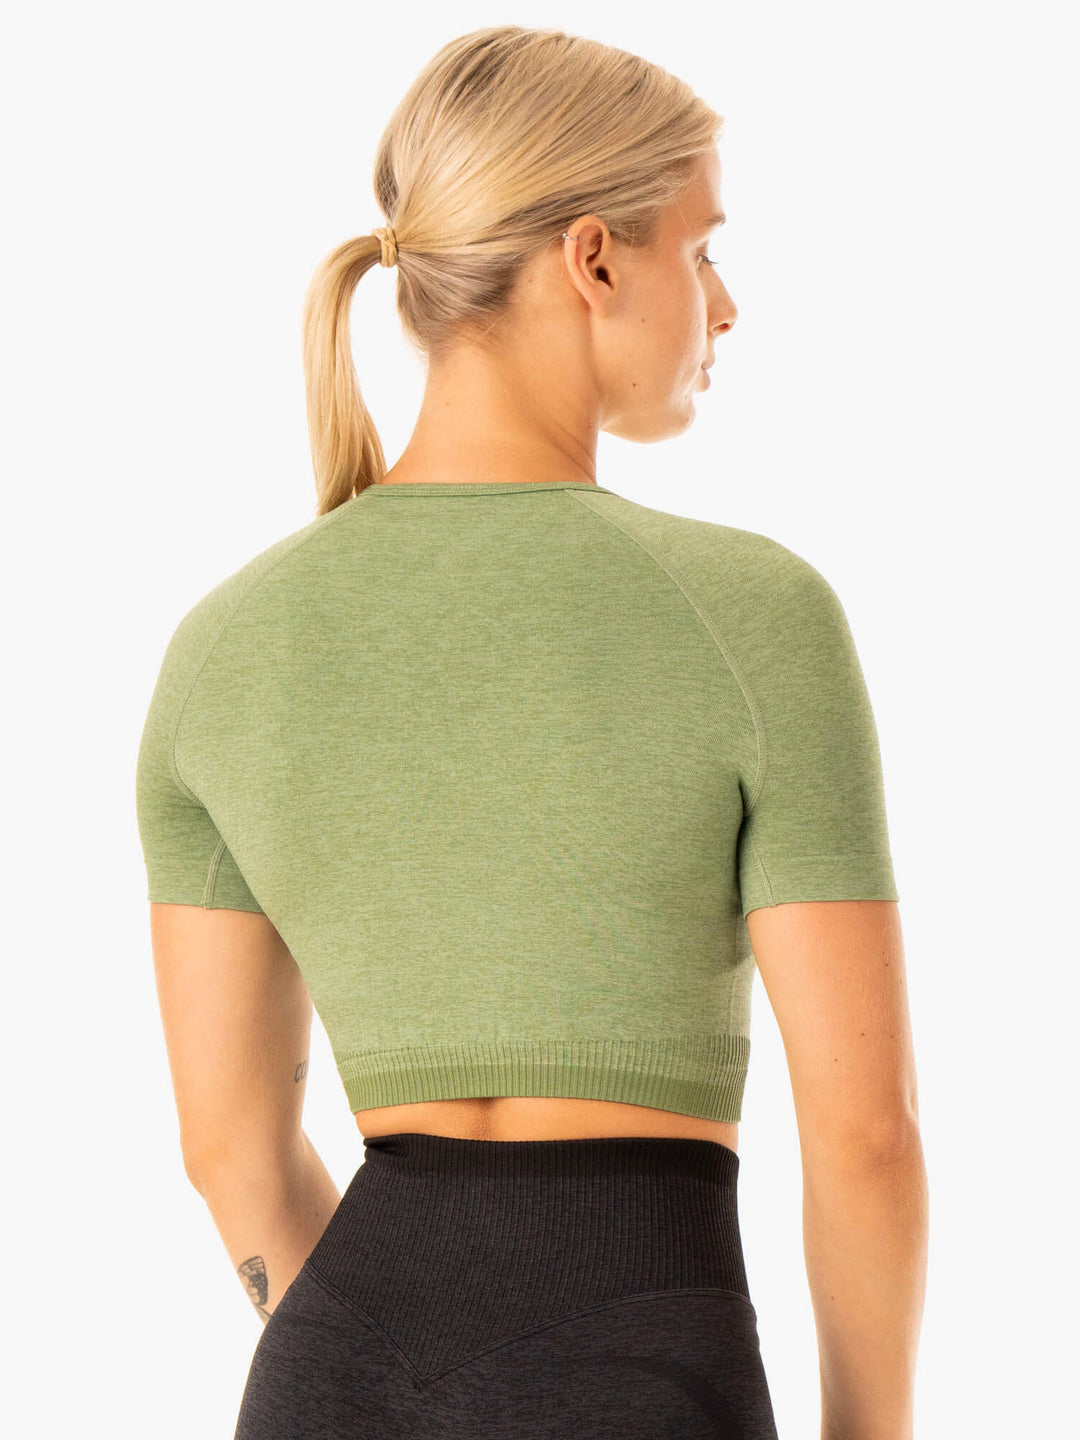 Excel Seamless T-Shirt - Moss Green Marl Clothing Ryderwear 